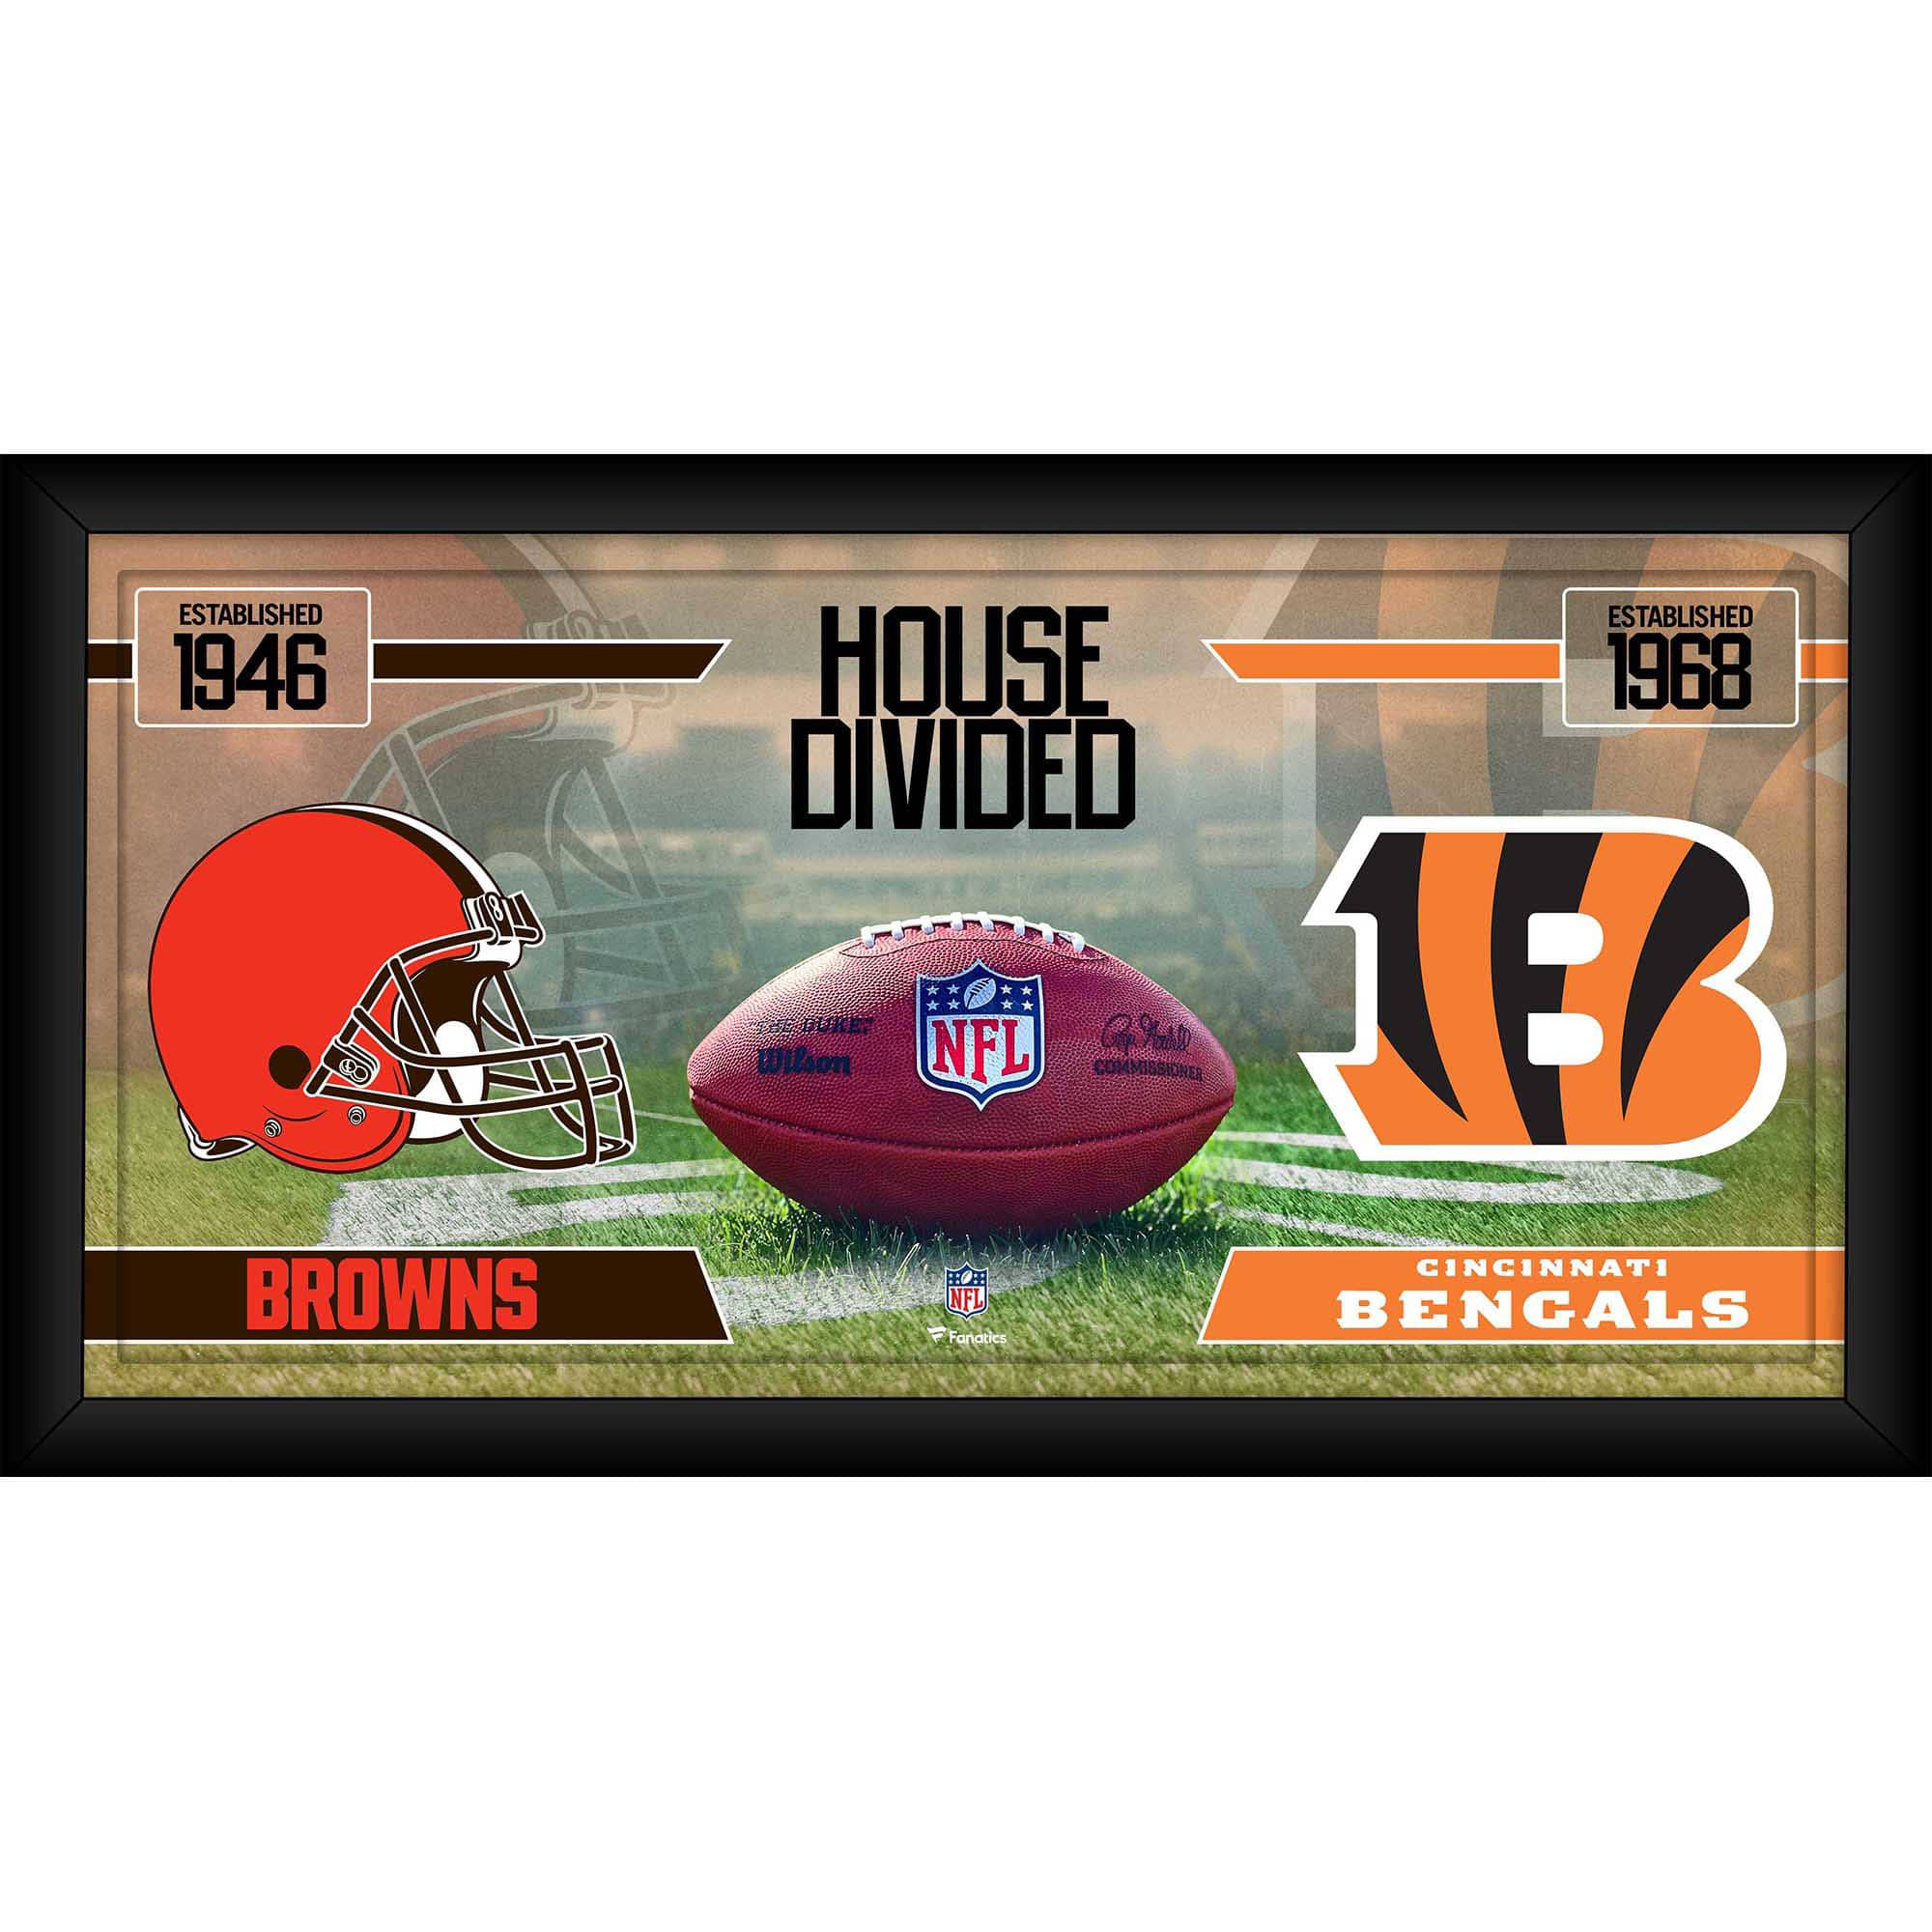 Cleveland Browns vs. Cincinnati Bengals, gerahmt, 25,4 x 50,8 cm, House Divided Football Collage